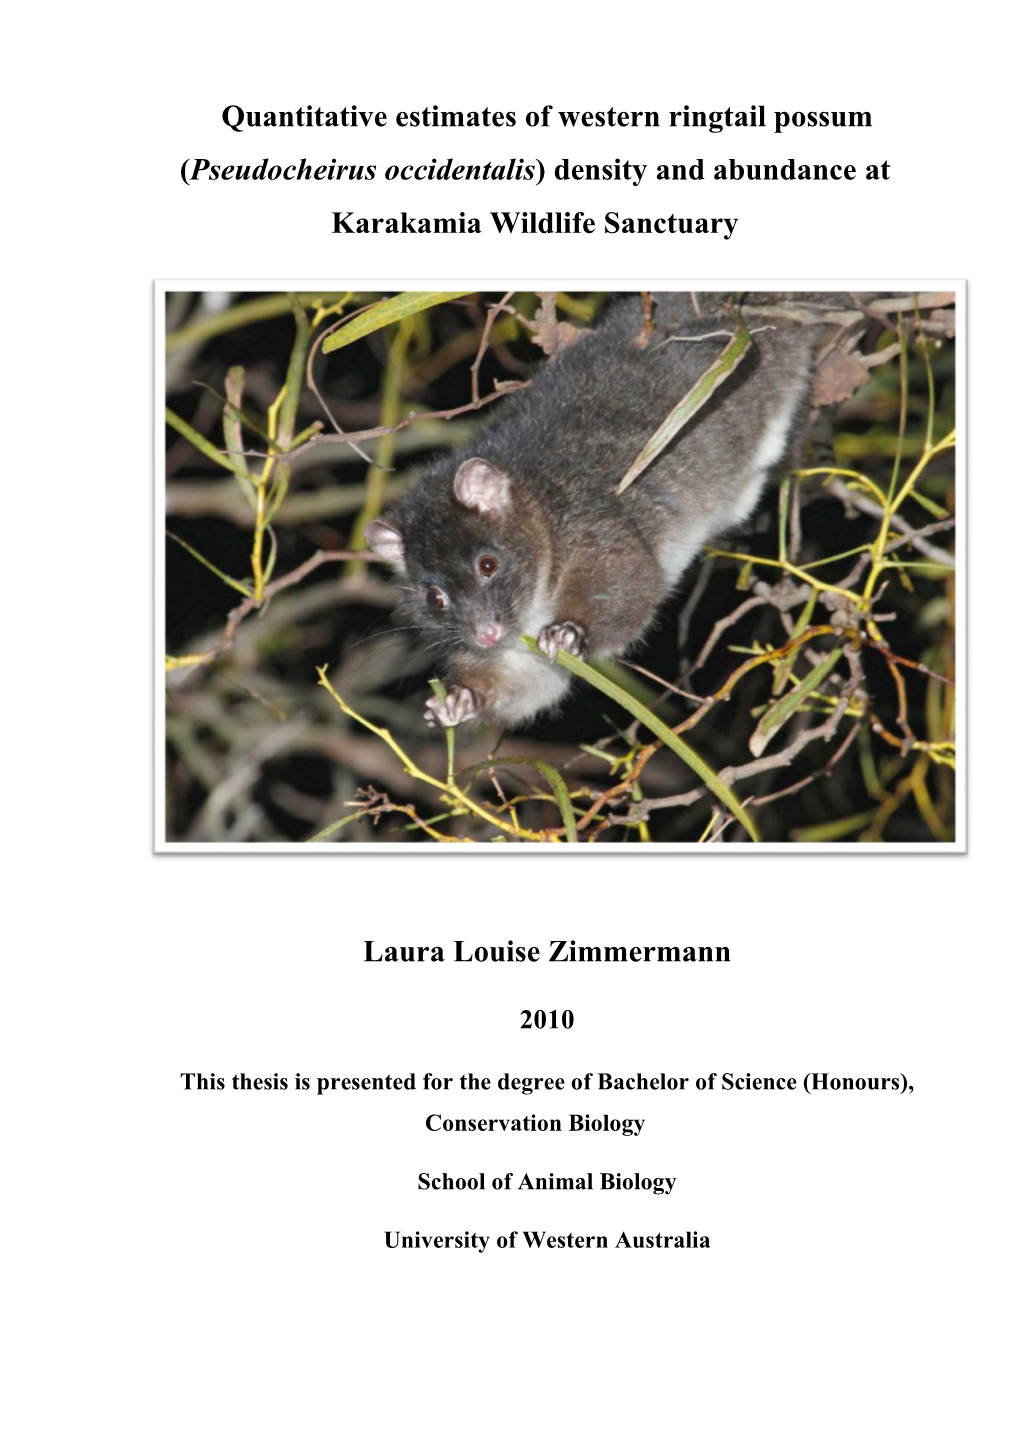 Quantitative Estimates of Western Ringtail Possum (Pseudocheirus Occidentalis) Density and Abundance at Karakamia Wildlife Sanctuary